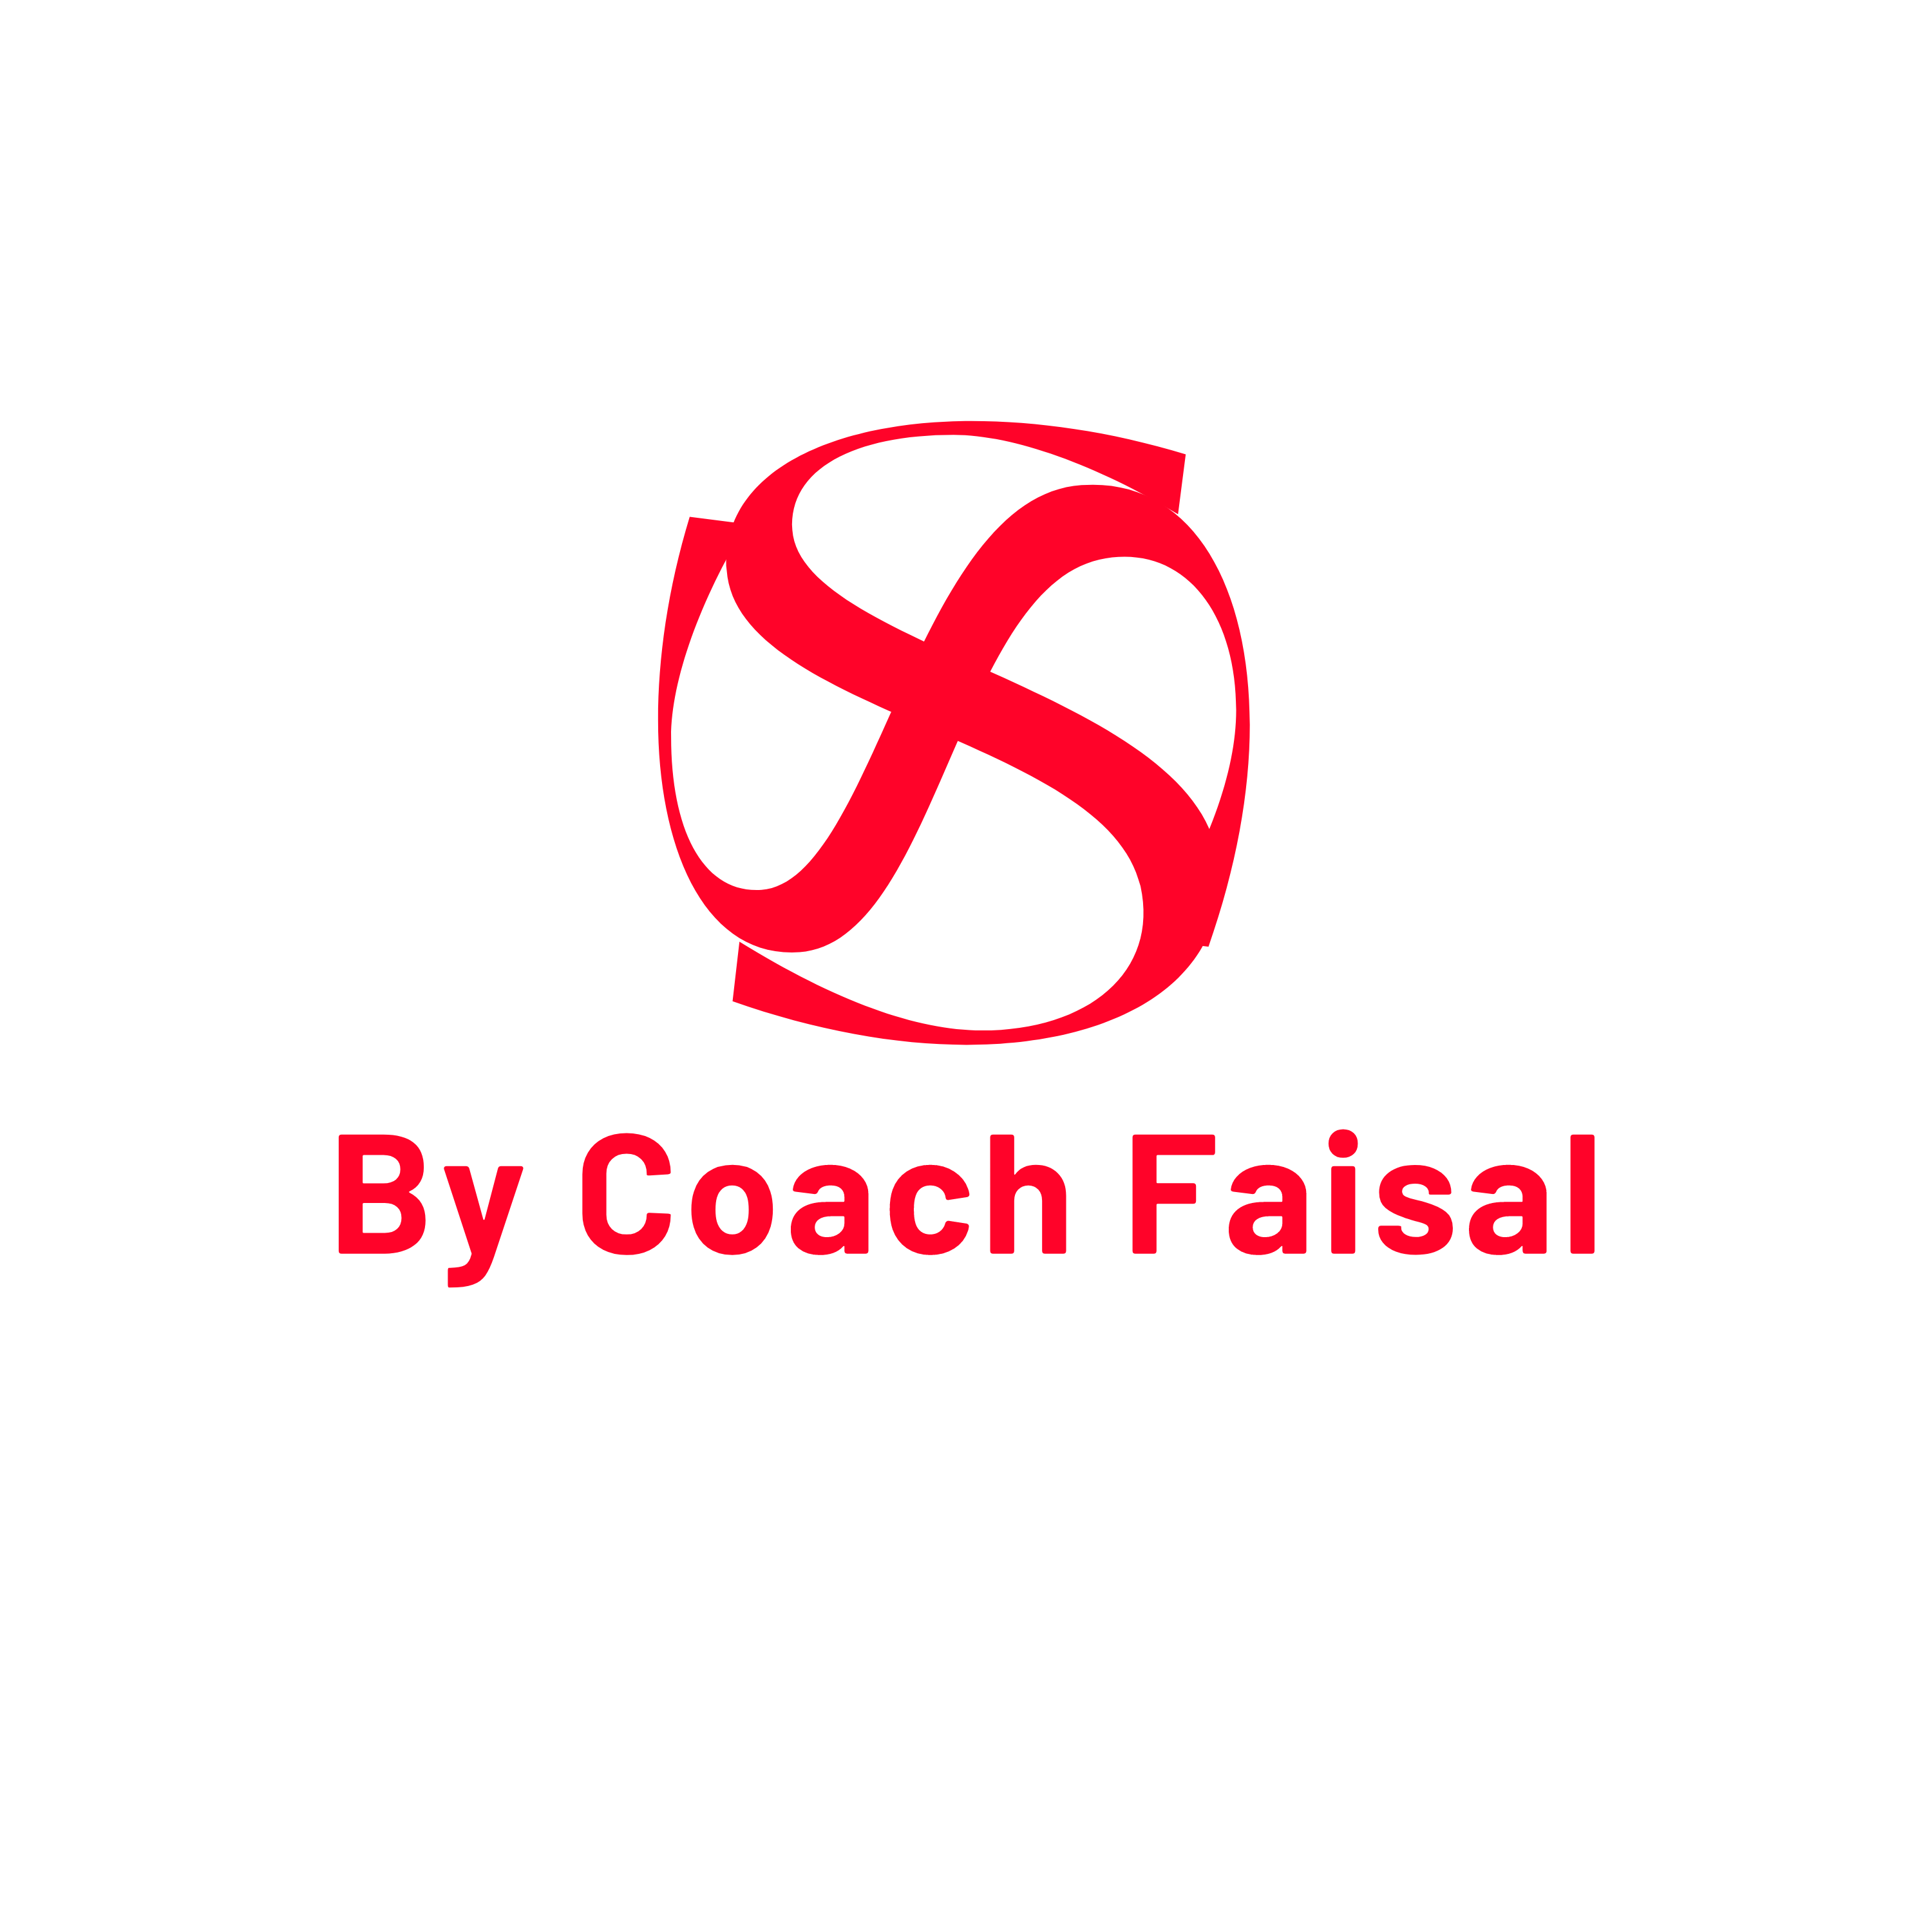 By Coach faisal logo